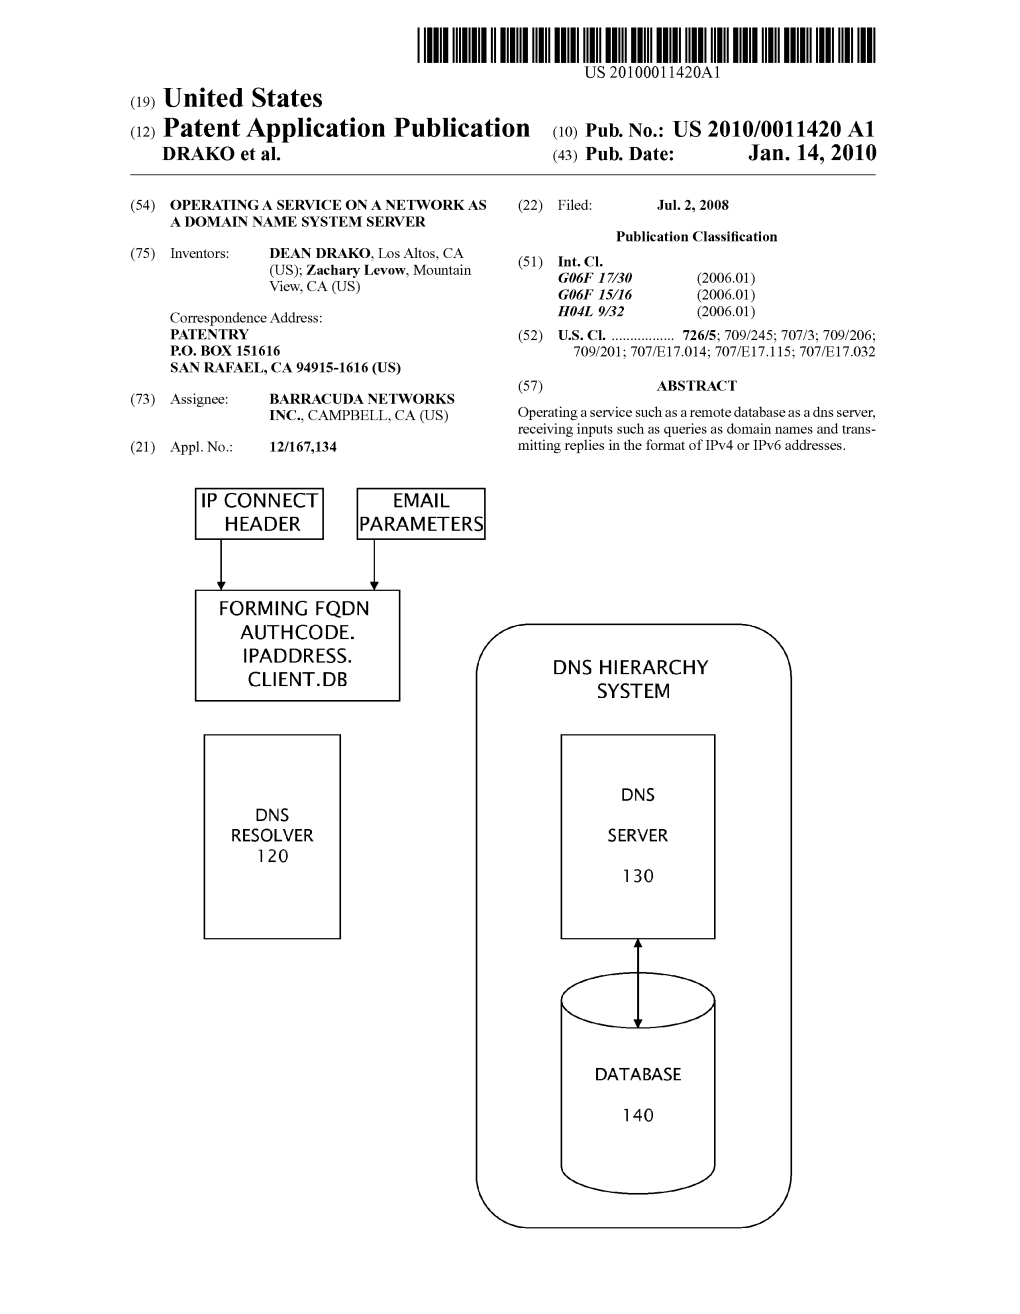 (12) Patent Application Publication (10) Pub. No.: US 2010/0011420 A1 DRAKO Et Al